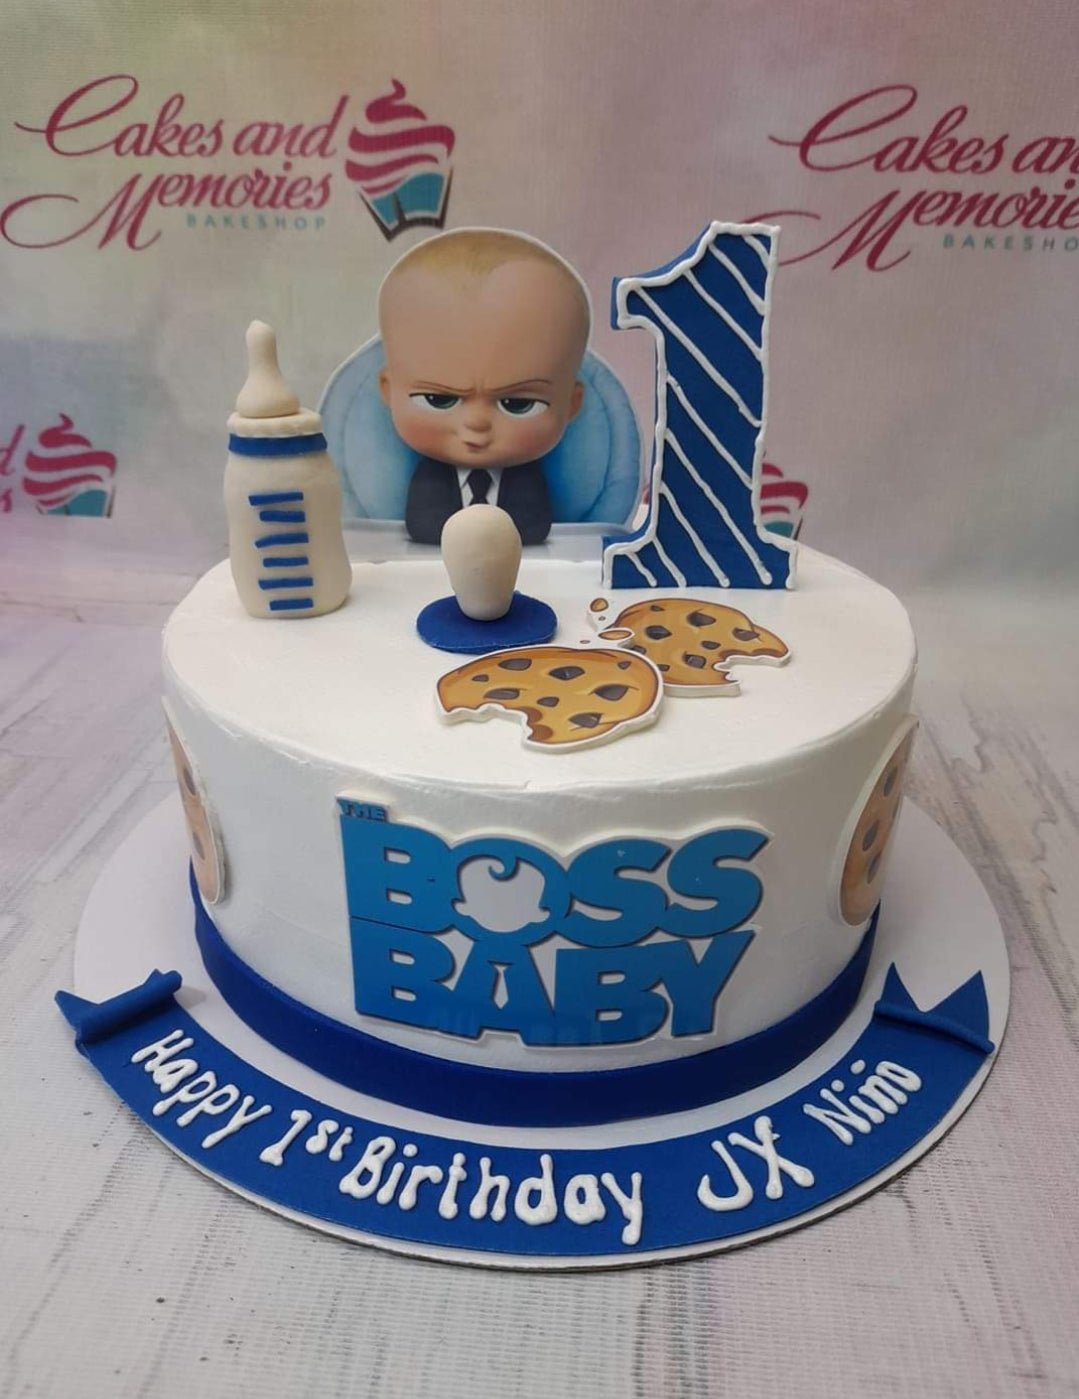 The Boss Birthday Cake - Decorated Cake by MLADMAN - CakesDecor